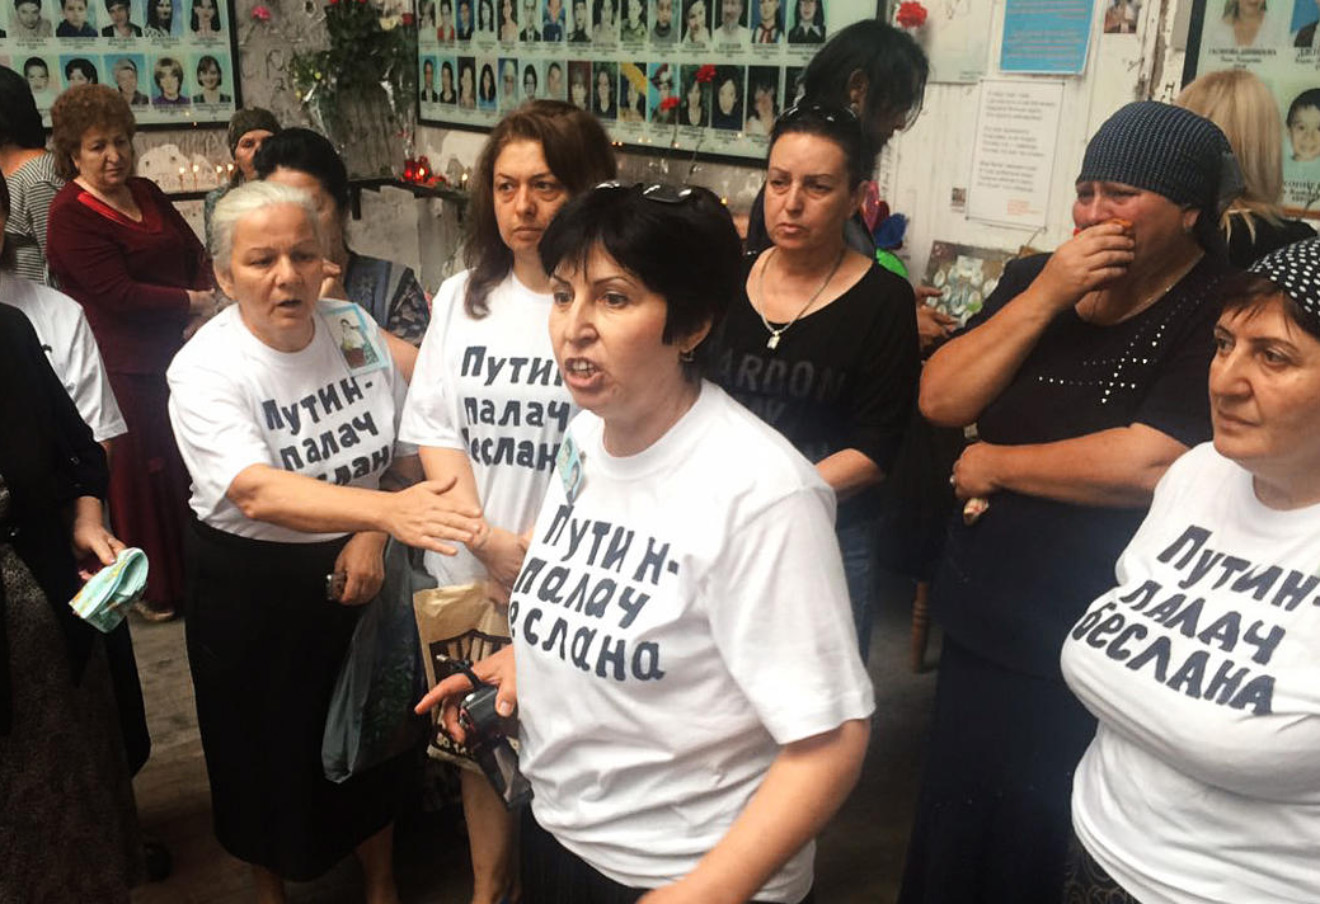 The Beslan mothers' t-shirts read “Putin is the Executioner of Beslan.” Photo: Diana Khachataryan